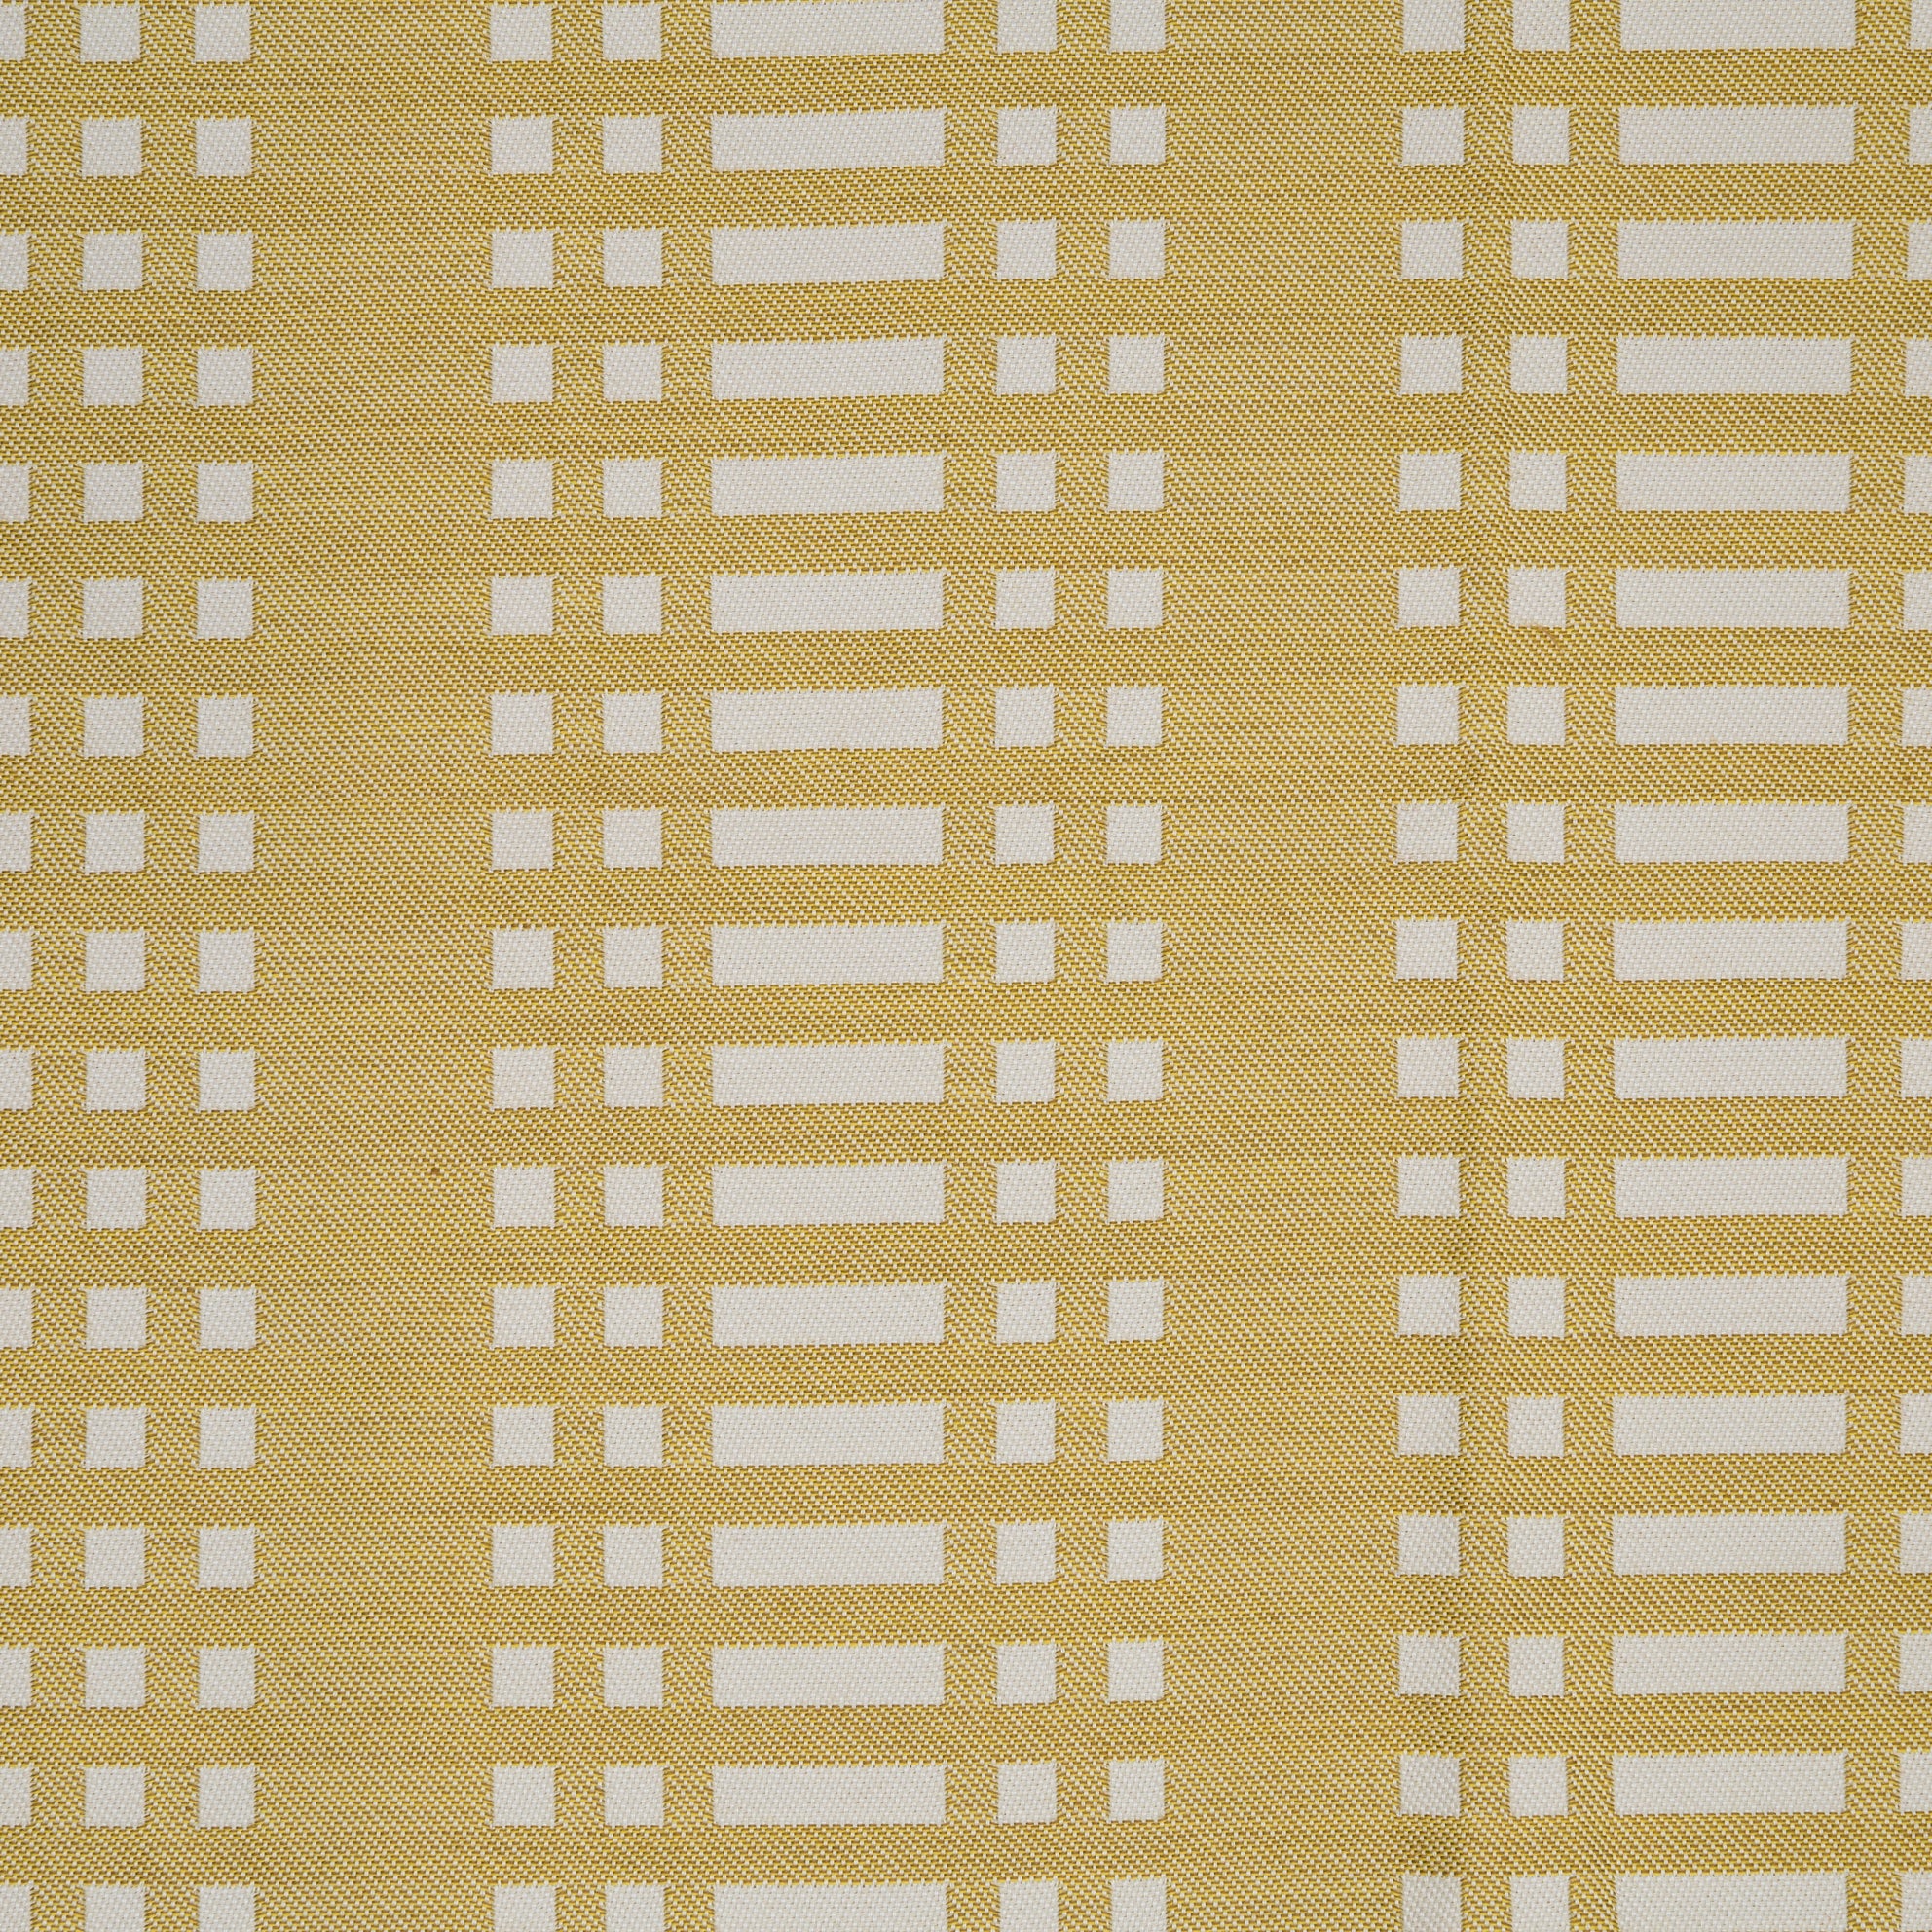 Nereus Contract Furnishing Fabric - Straw | Nicholas Engert Interiors